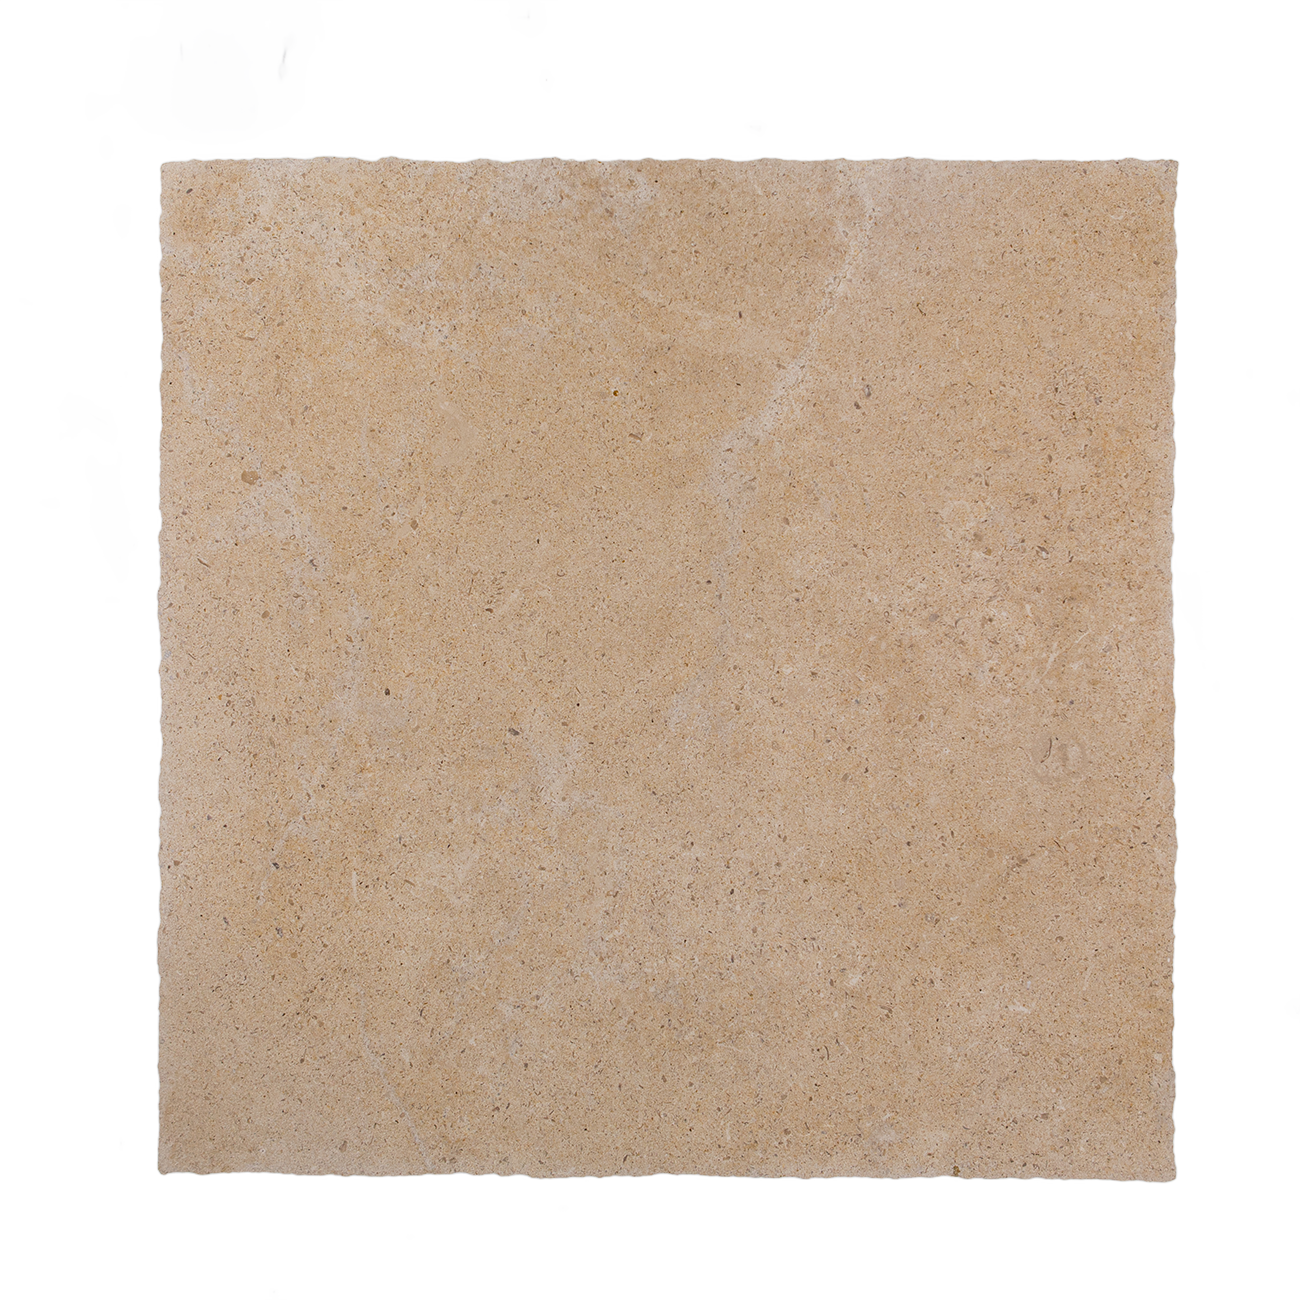 haussmann corton beige limestone square natural stone field tile 9x9 old world